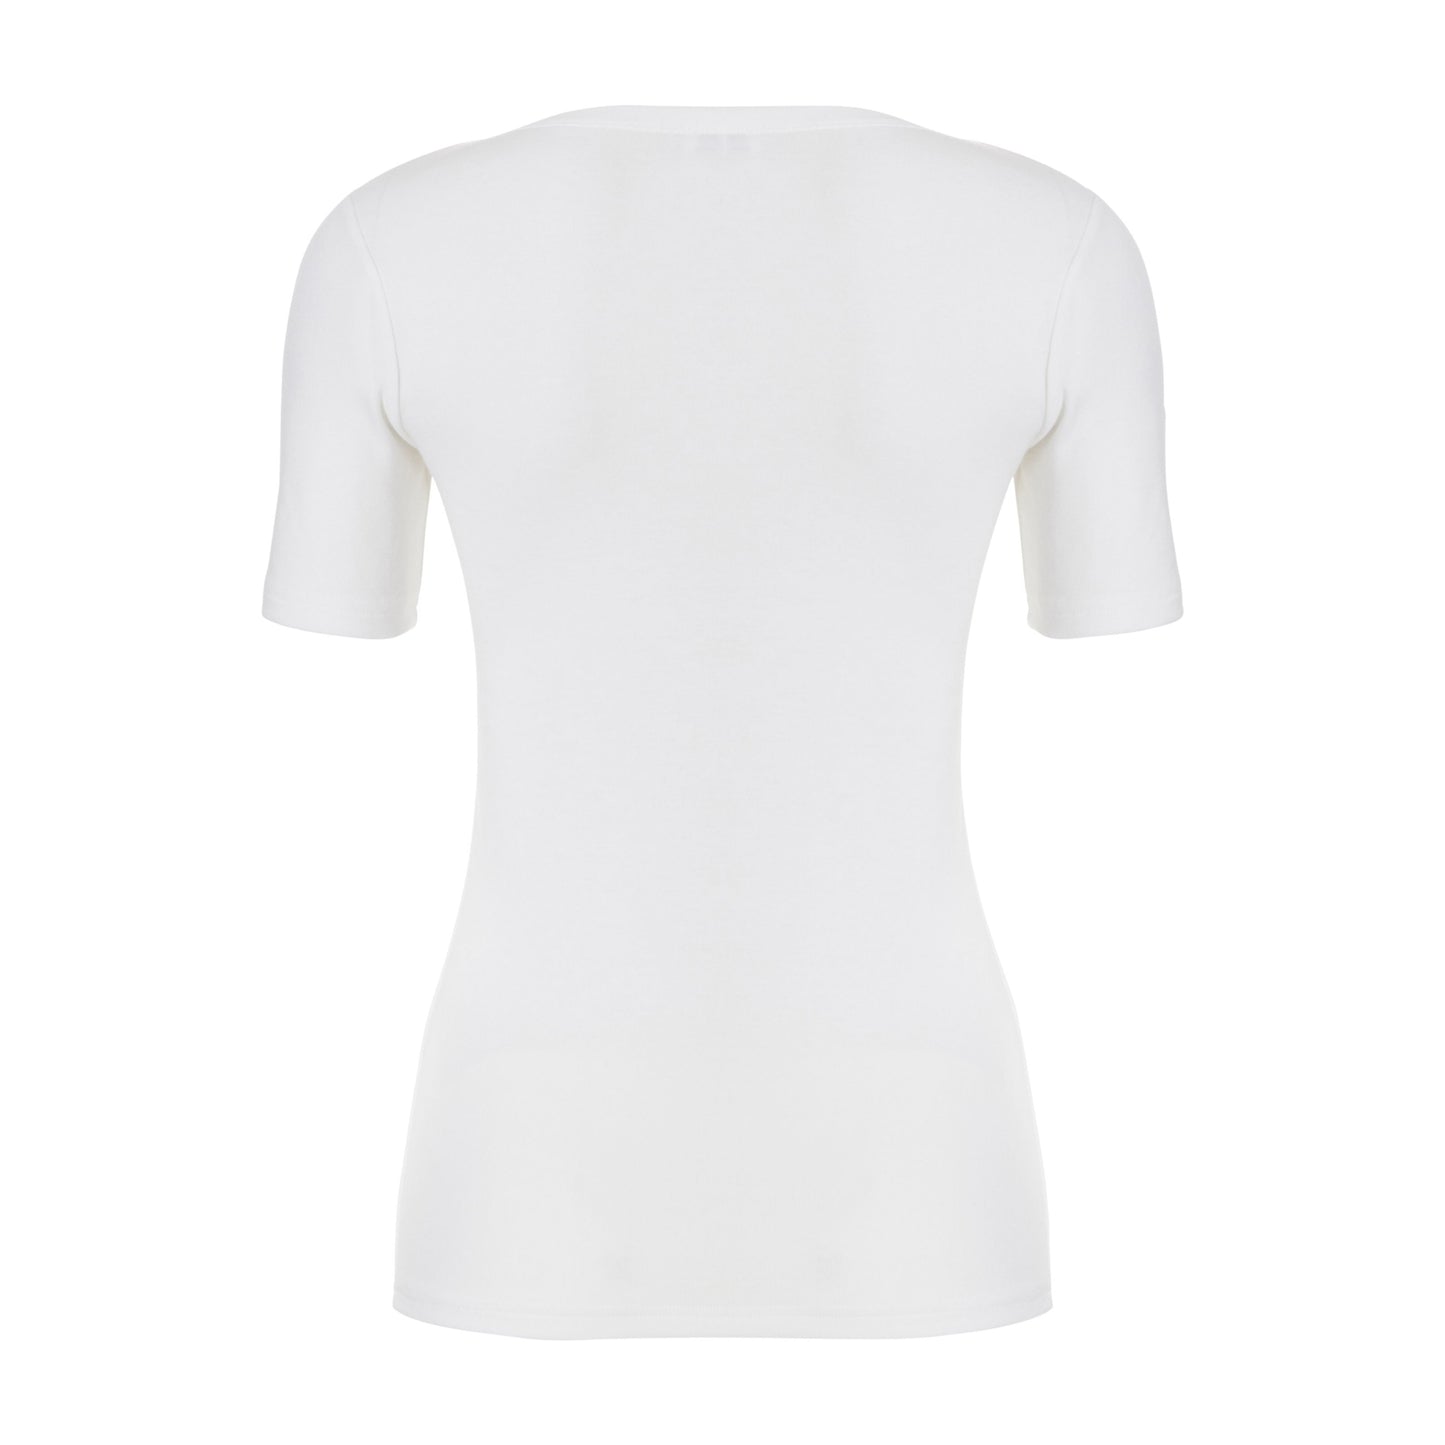 ten Cate Thermo Dames - Thermo T-shirt korte mouw 30239 - 2 kleuren